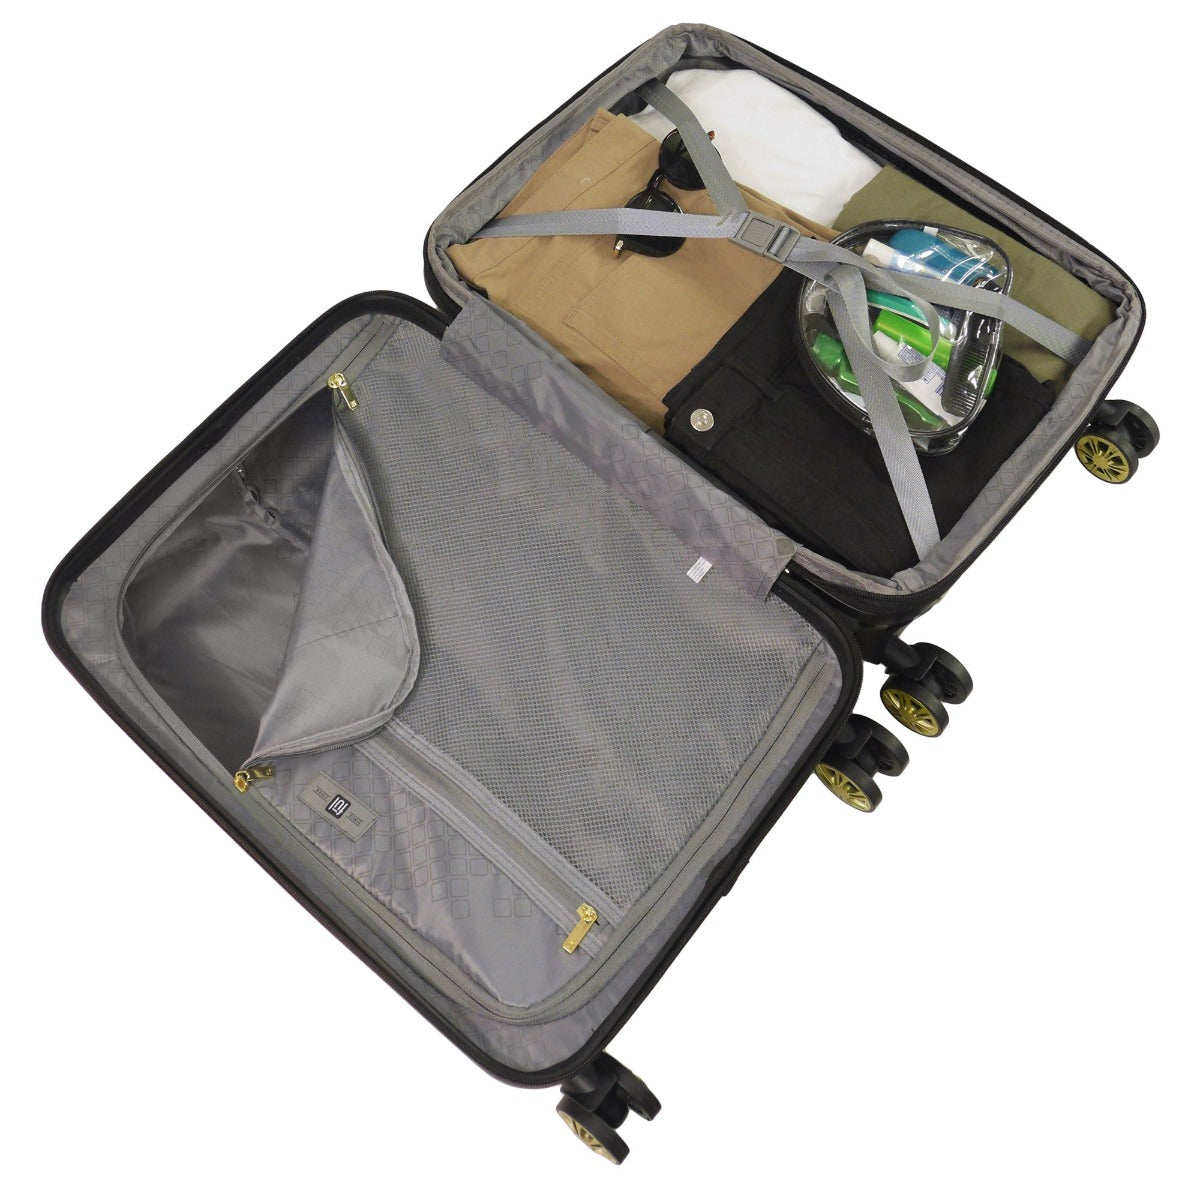 Ful Impulse Mixed Dots hardside spinner luggage 3 piece set black gold suitcase Interior